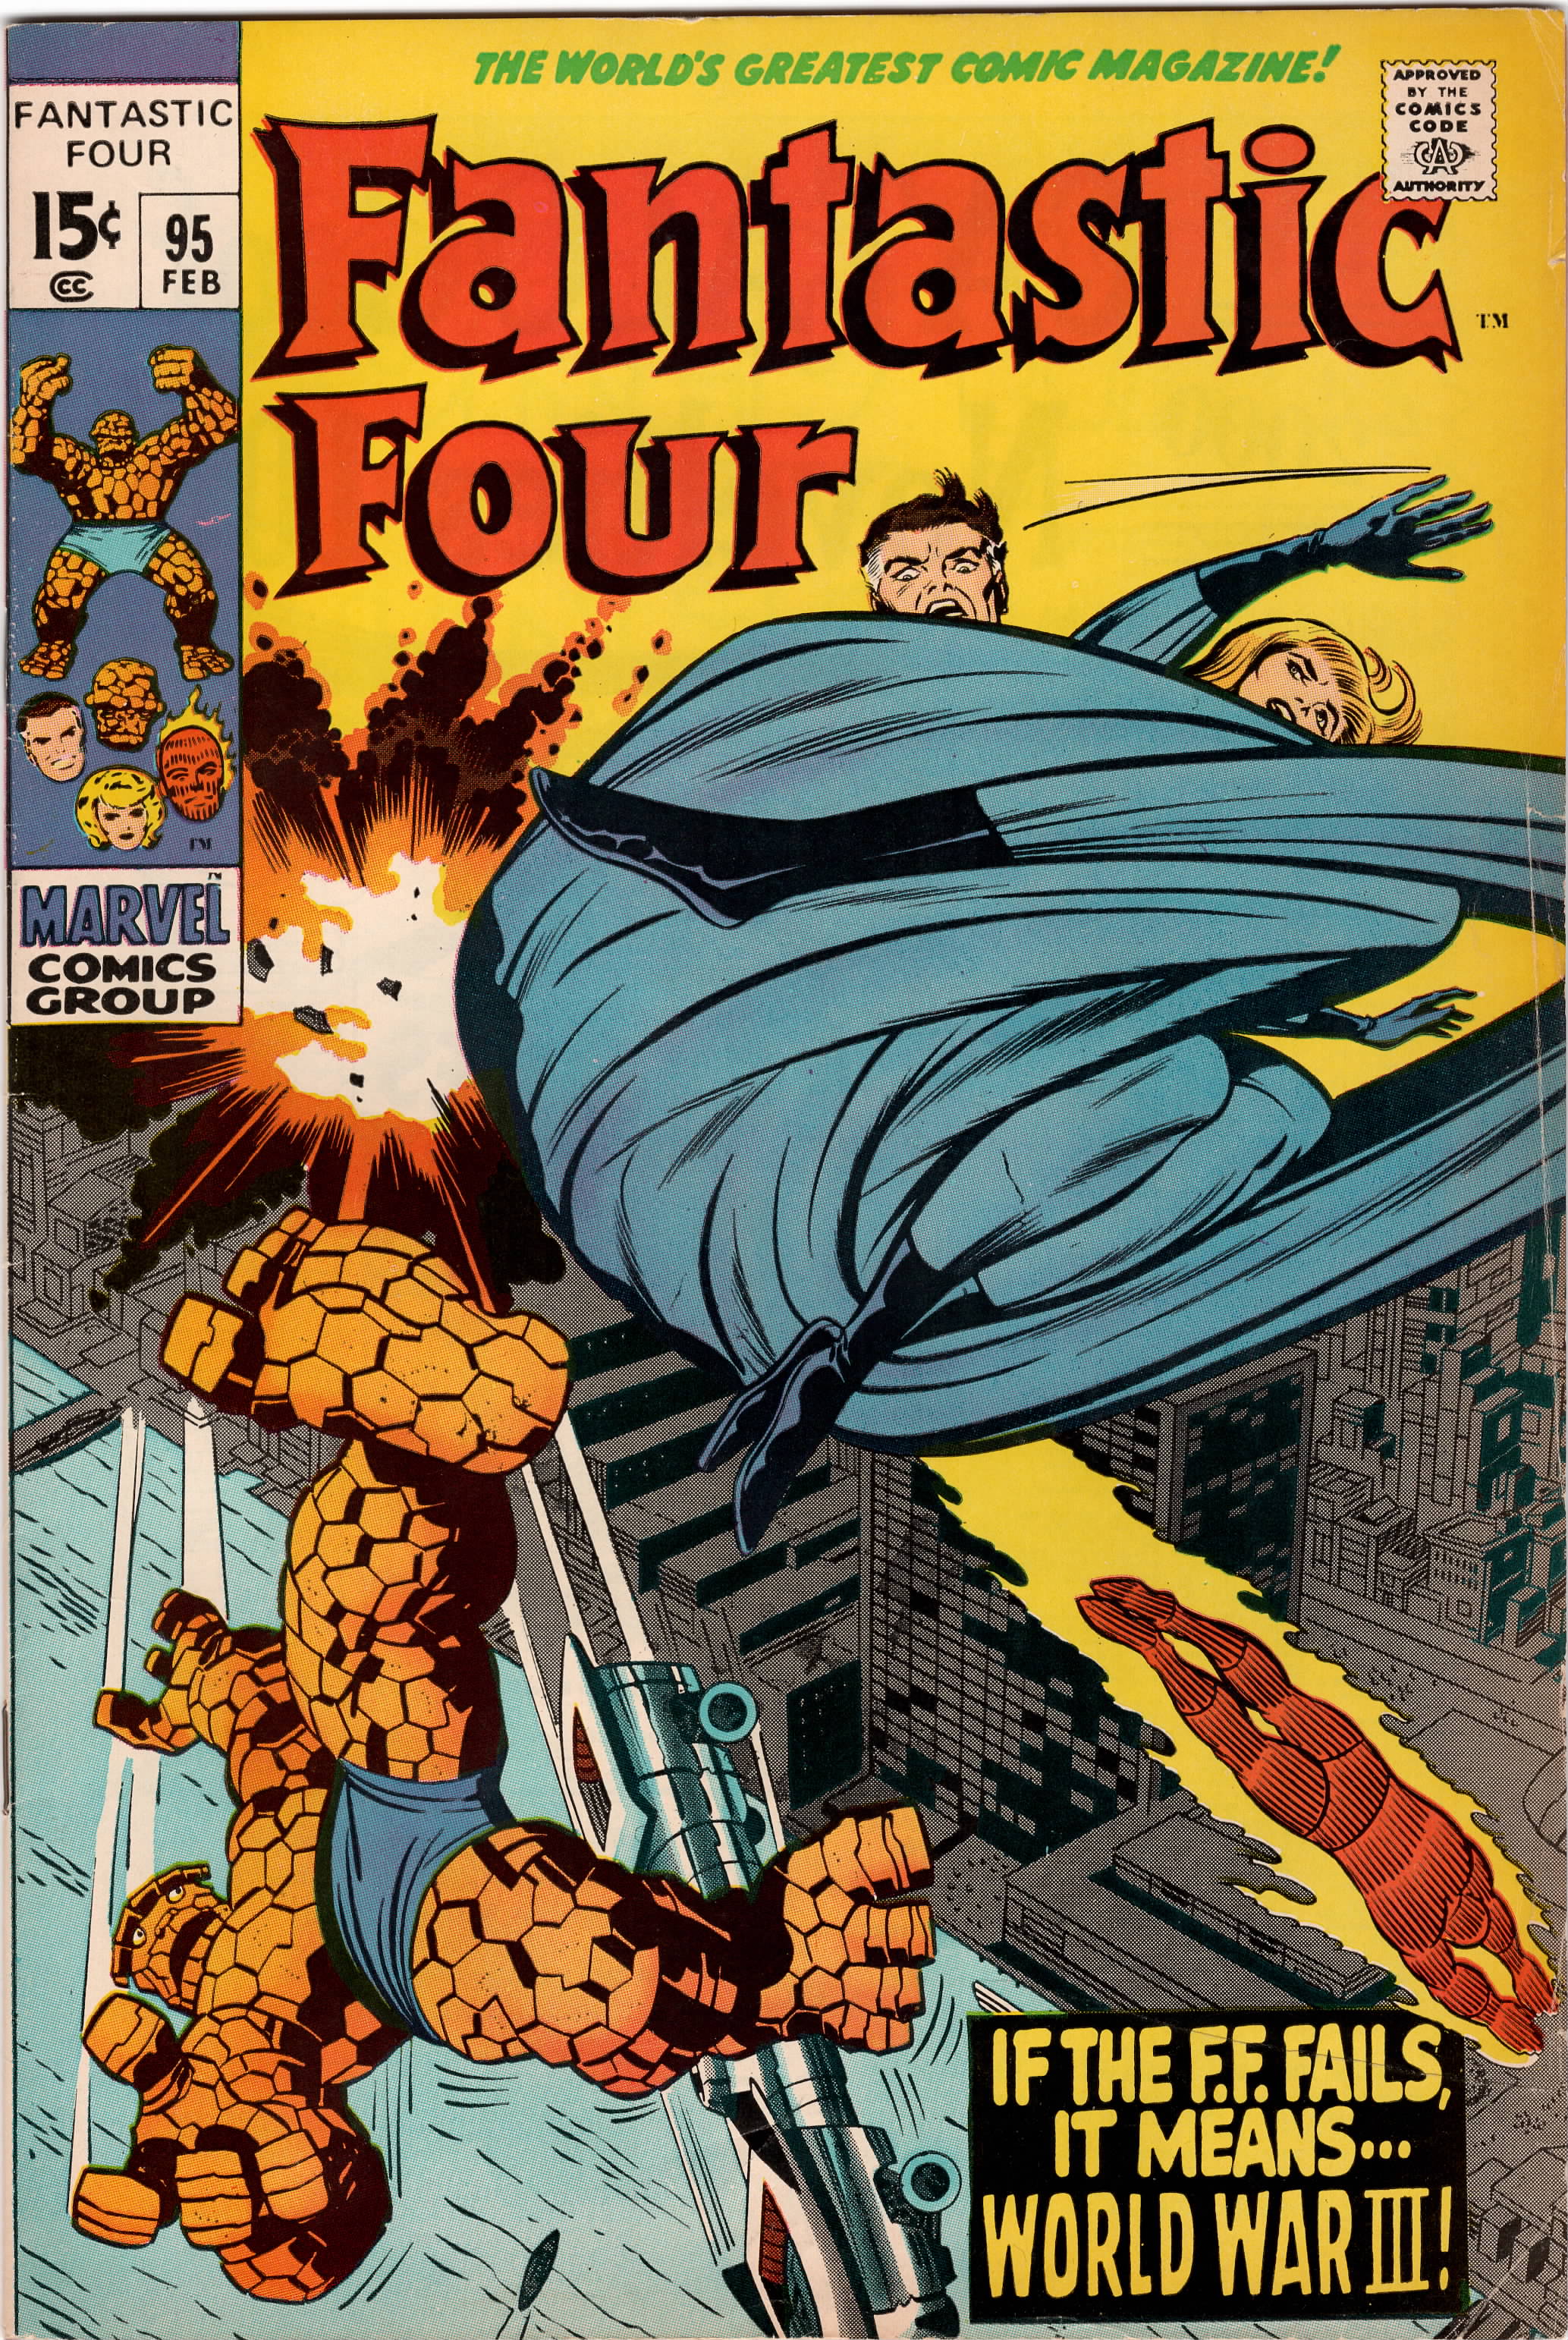 Fantastic Four #095